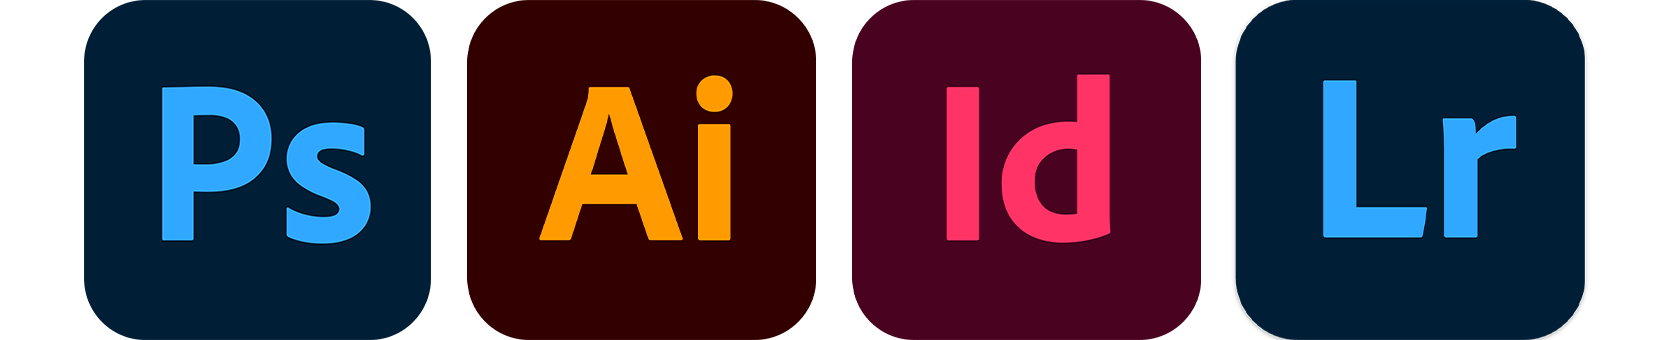 Logo Suite Adobe